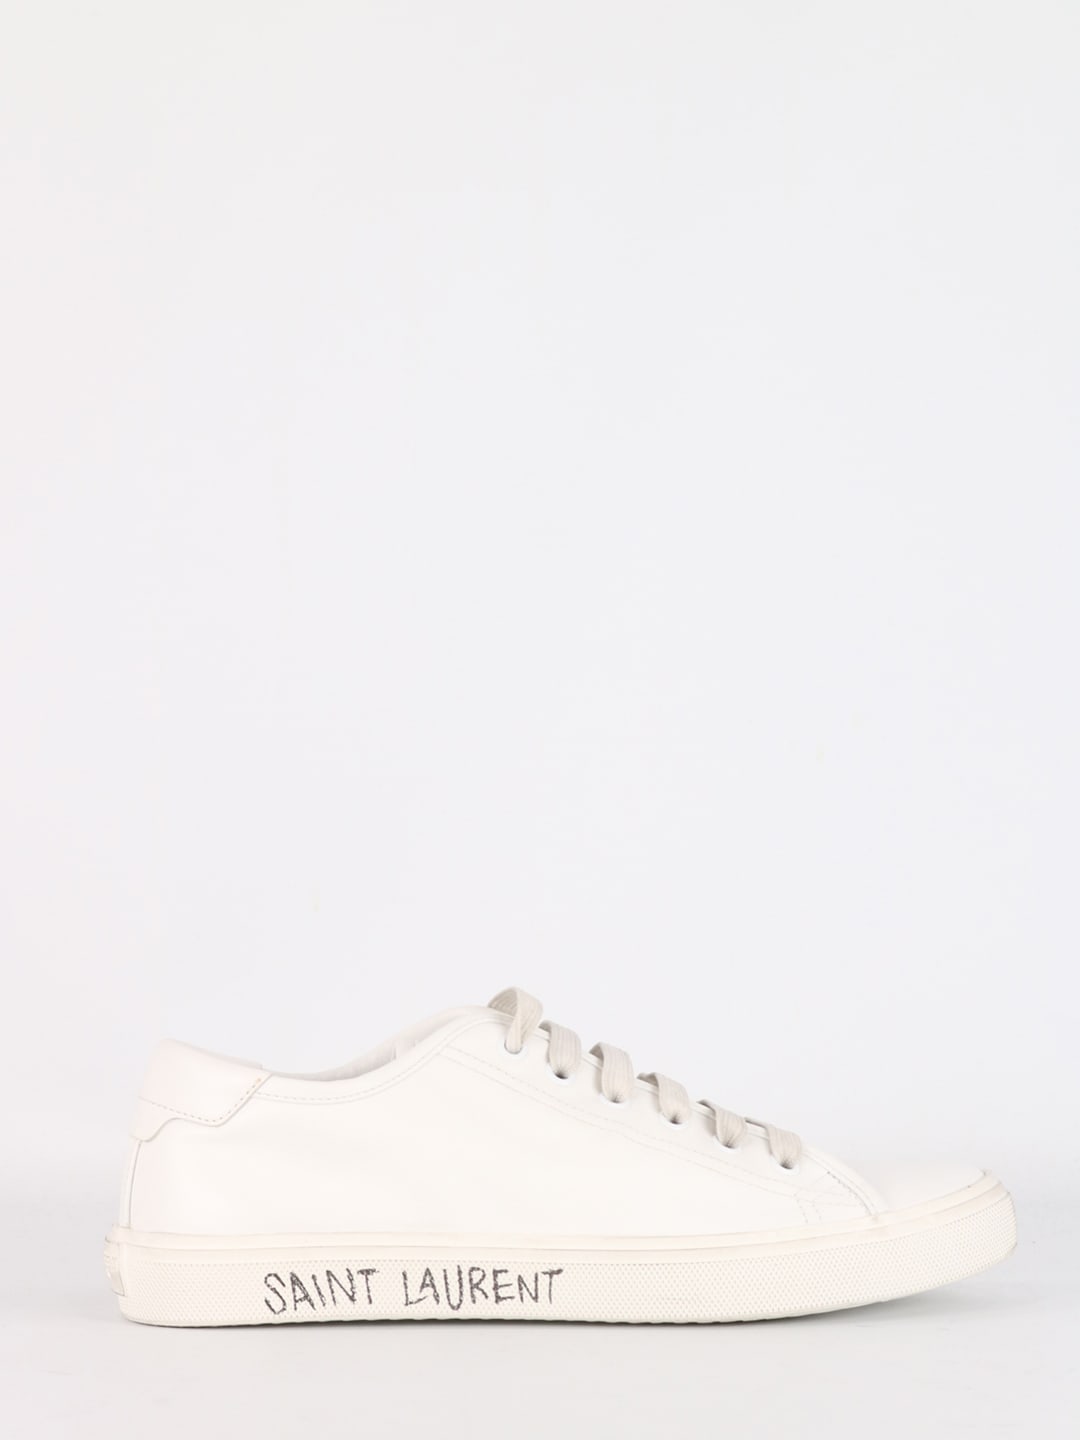 Saint Laurent Malibu White Sneakers